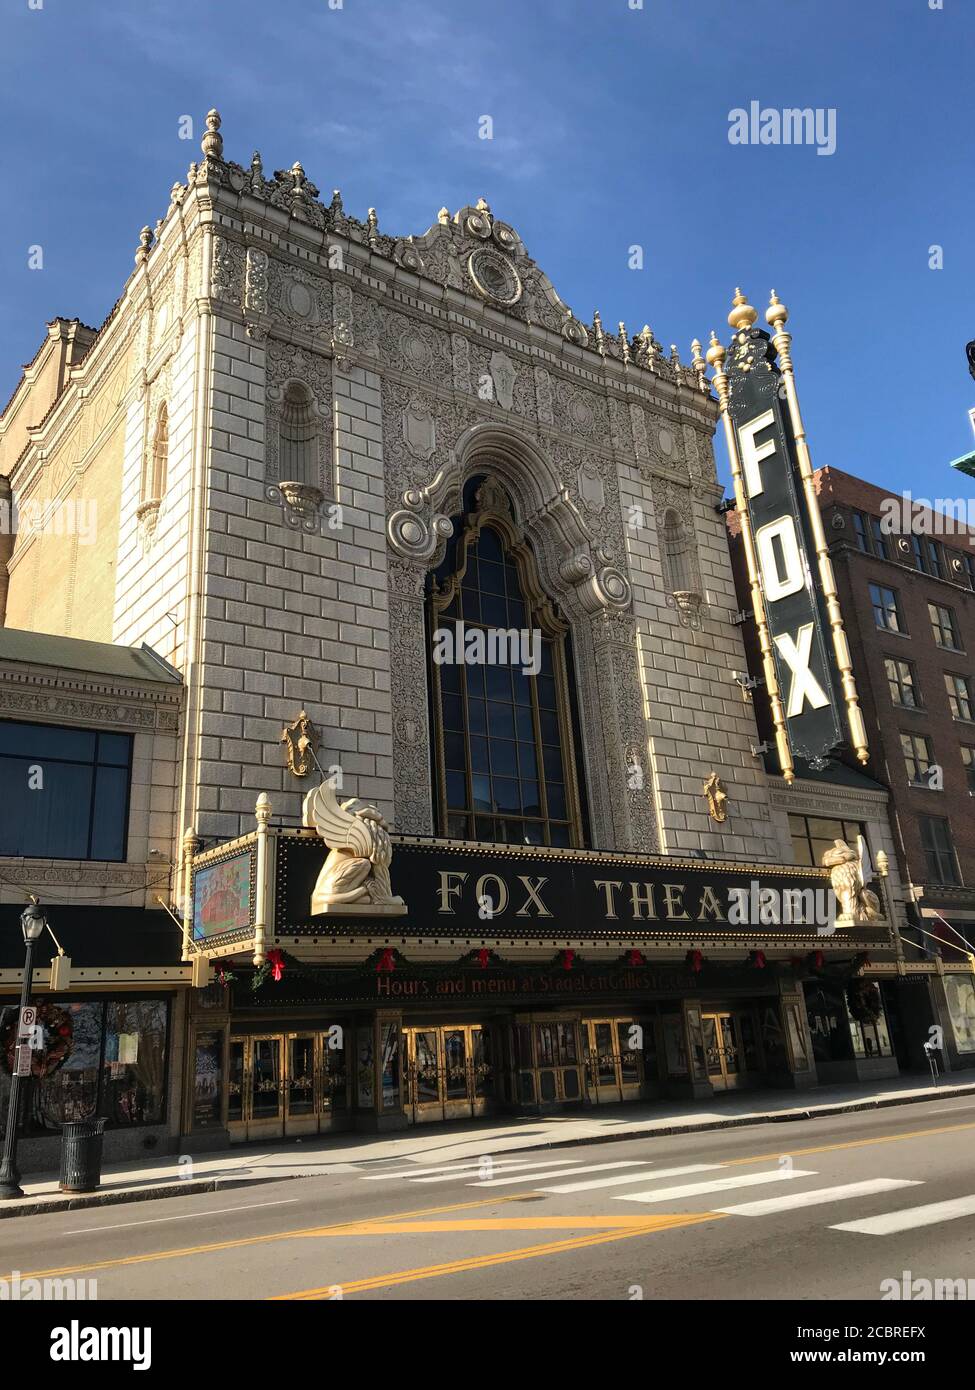 Fox Theatre facade at St. Louis city. Missouri / USA. Stock Photo